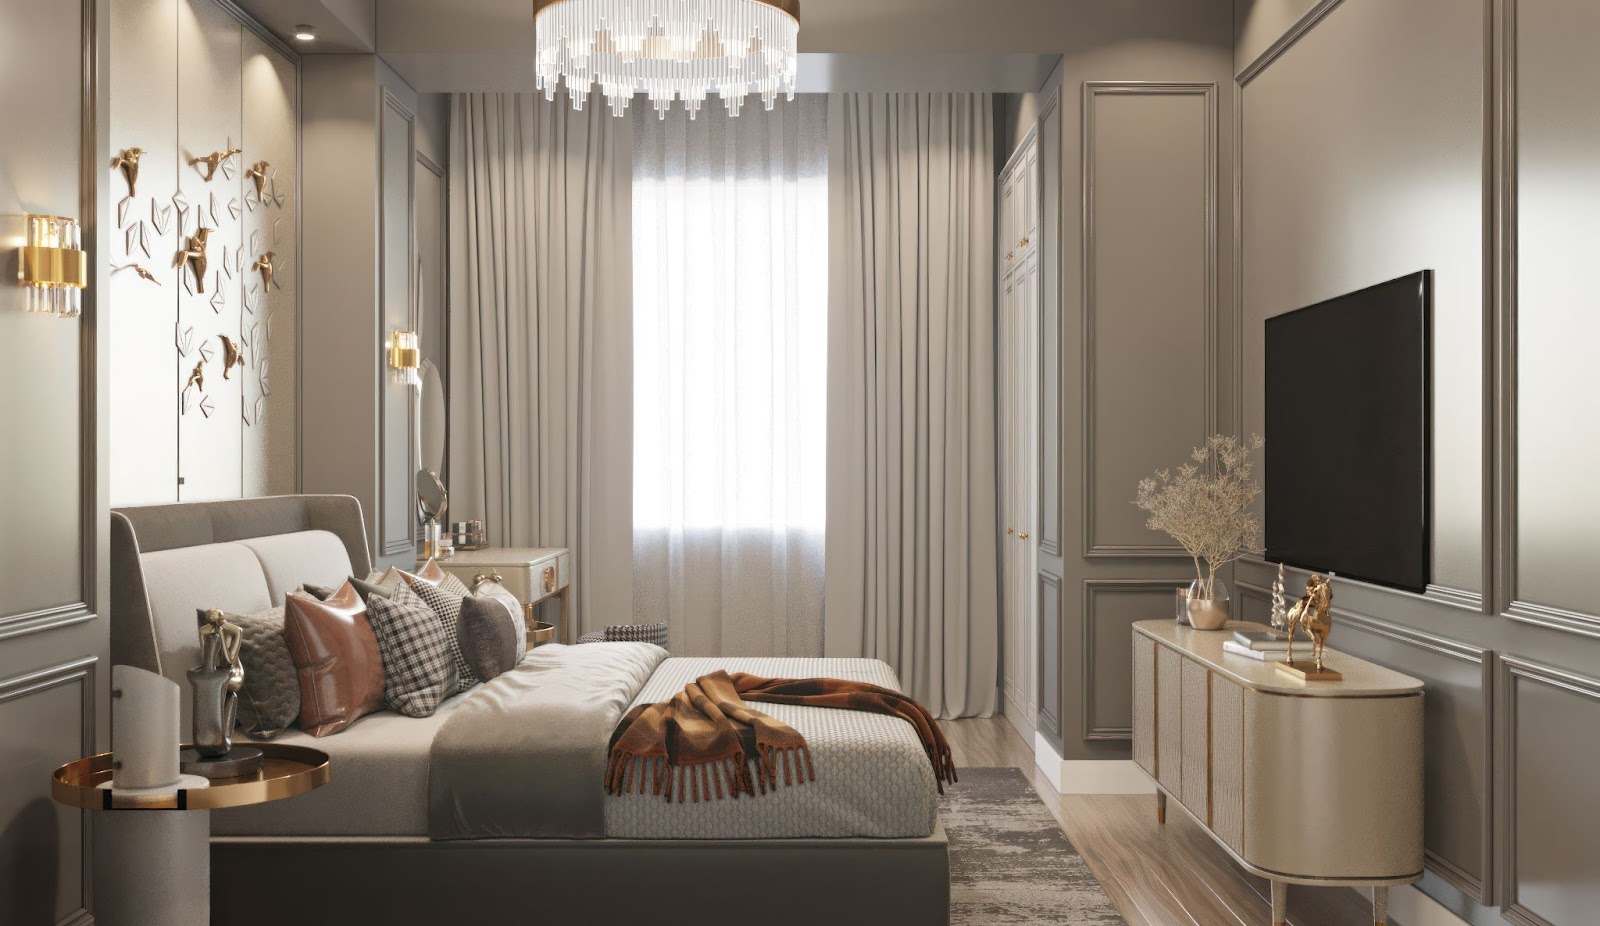 Duplex Interior Designs in Nigeria - luxury bedroom